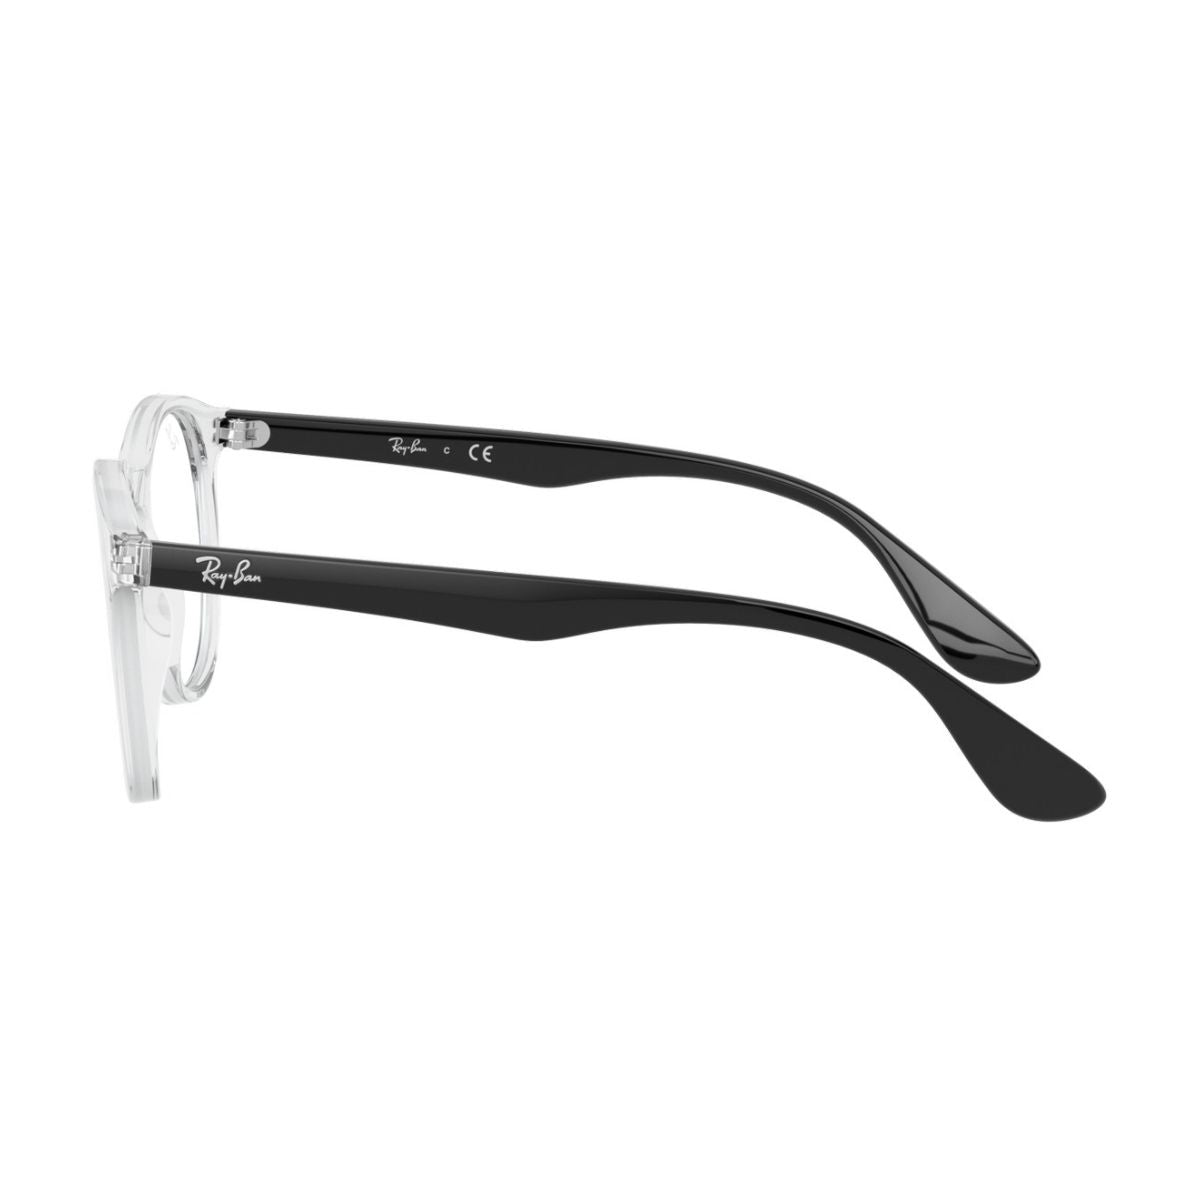 "stylish Rayban 1554 3541  eyeglasses & eyesight glasses frame for men's and women's at optorium"